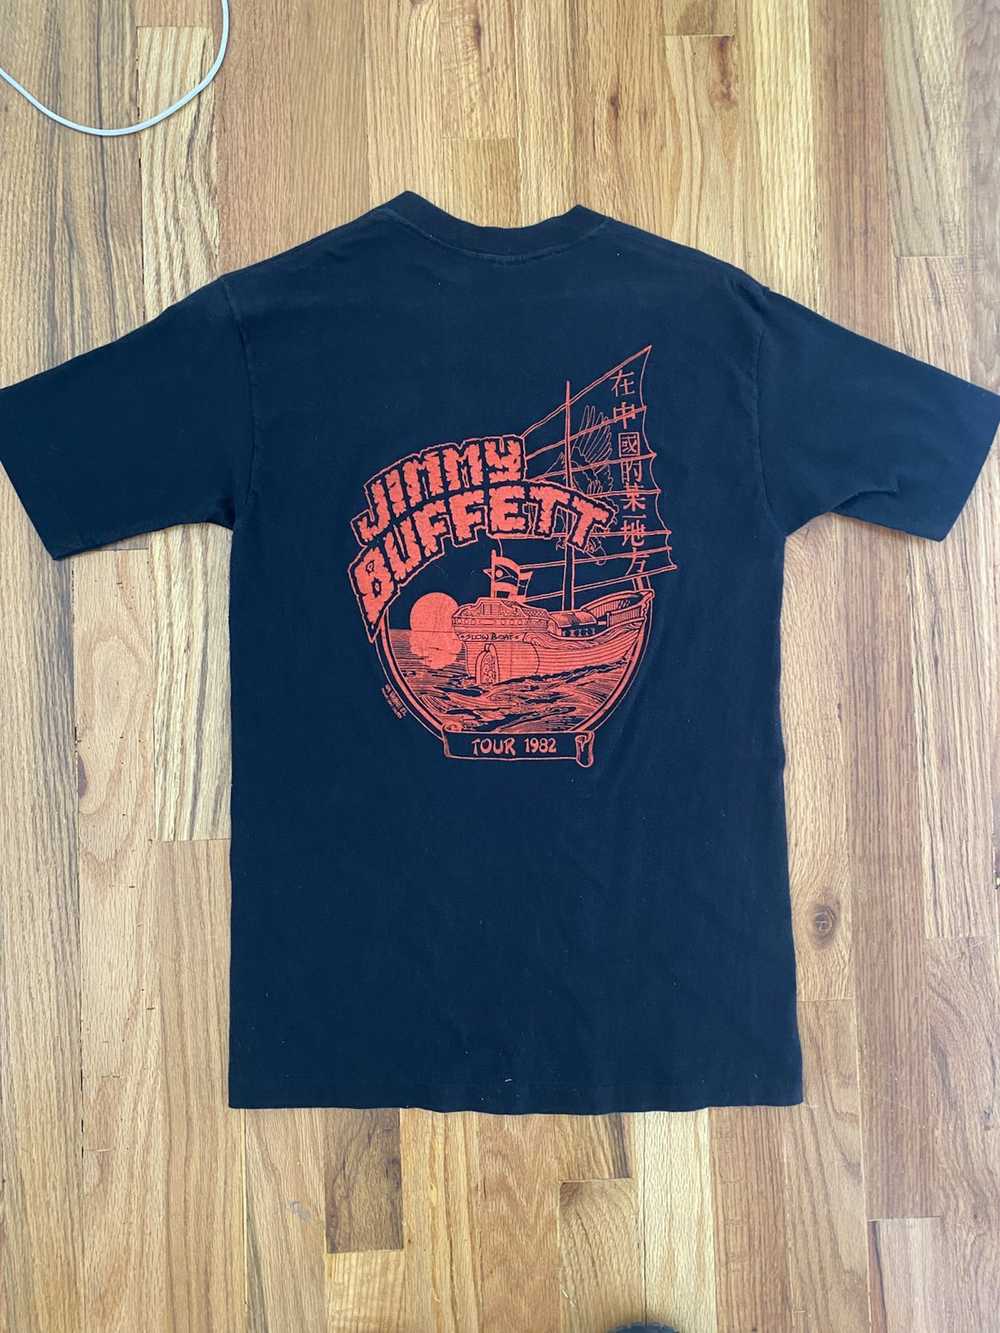 Vintage Jimmy Buffett 1982 Crew Shirt - image 2